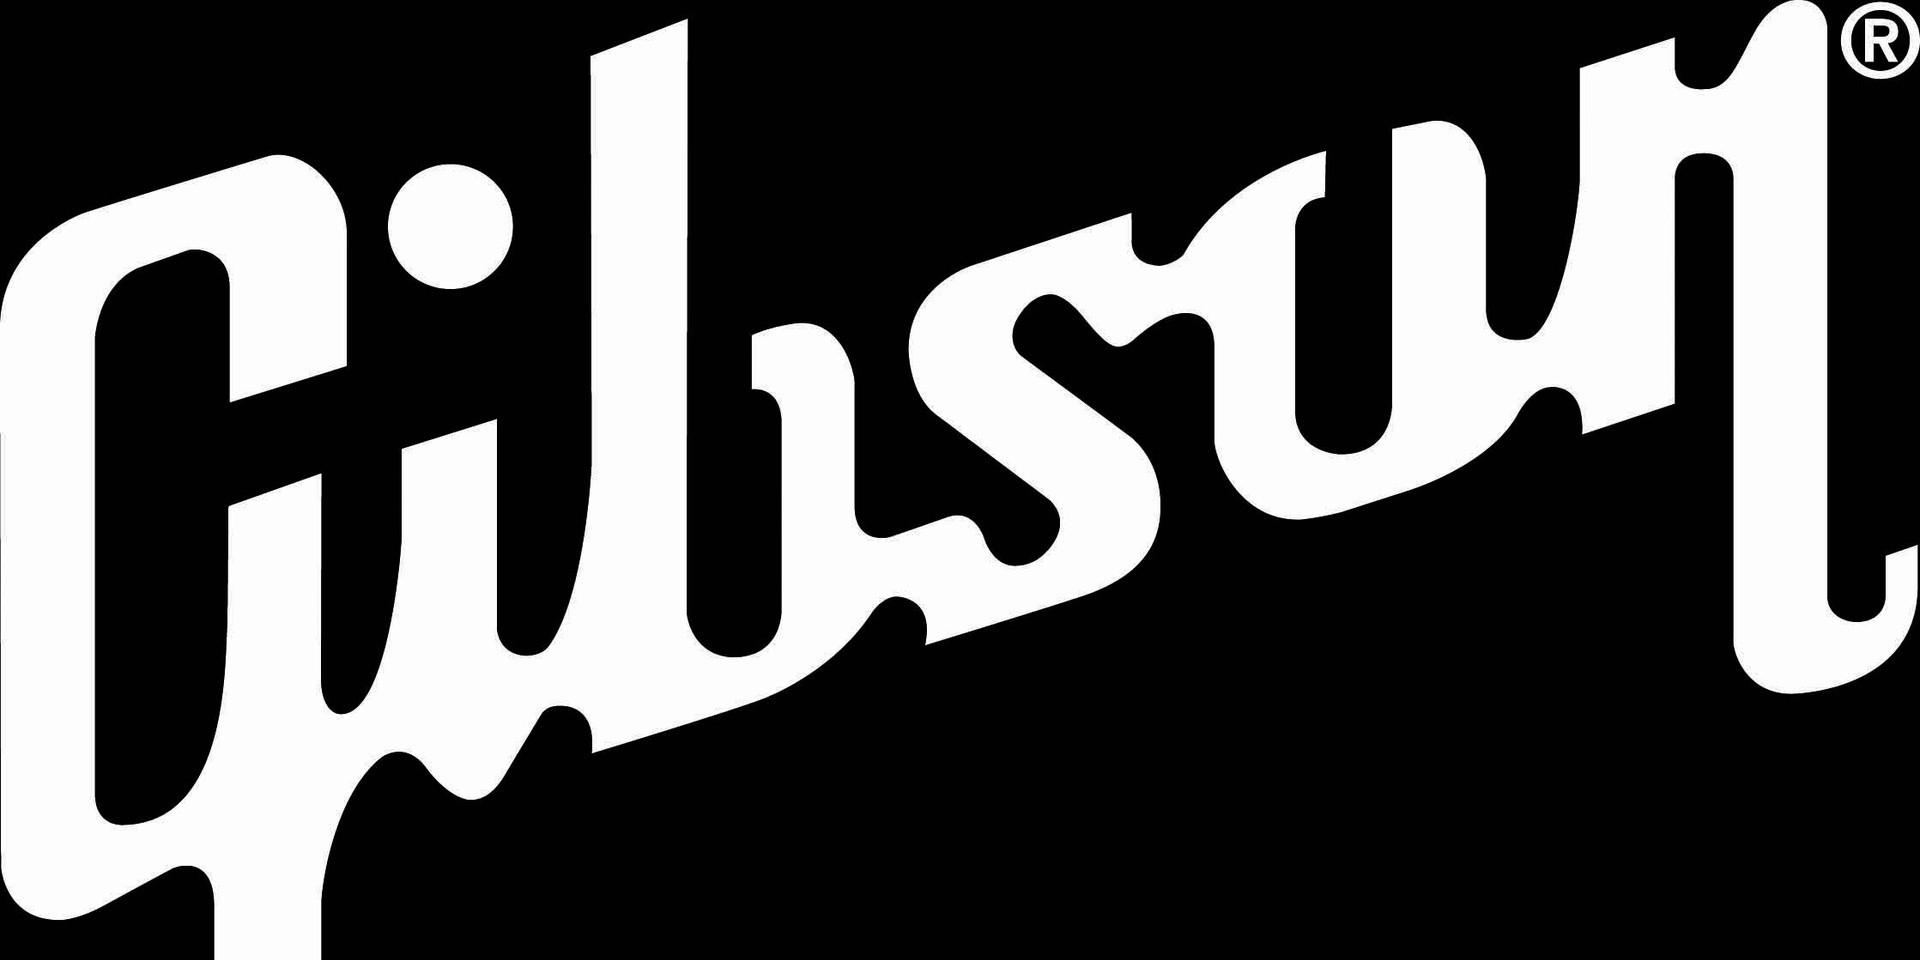 Gibson Guitars potentially facing bankruptcy 